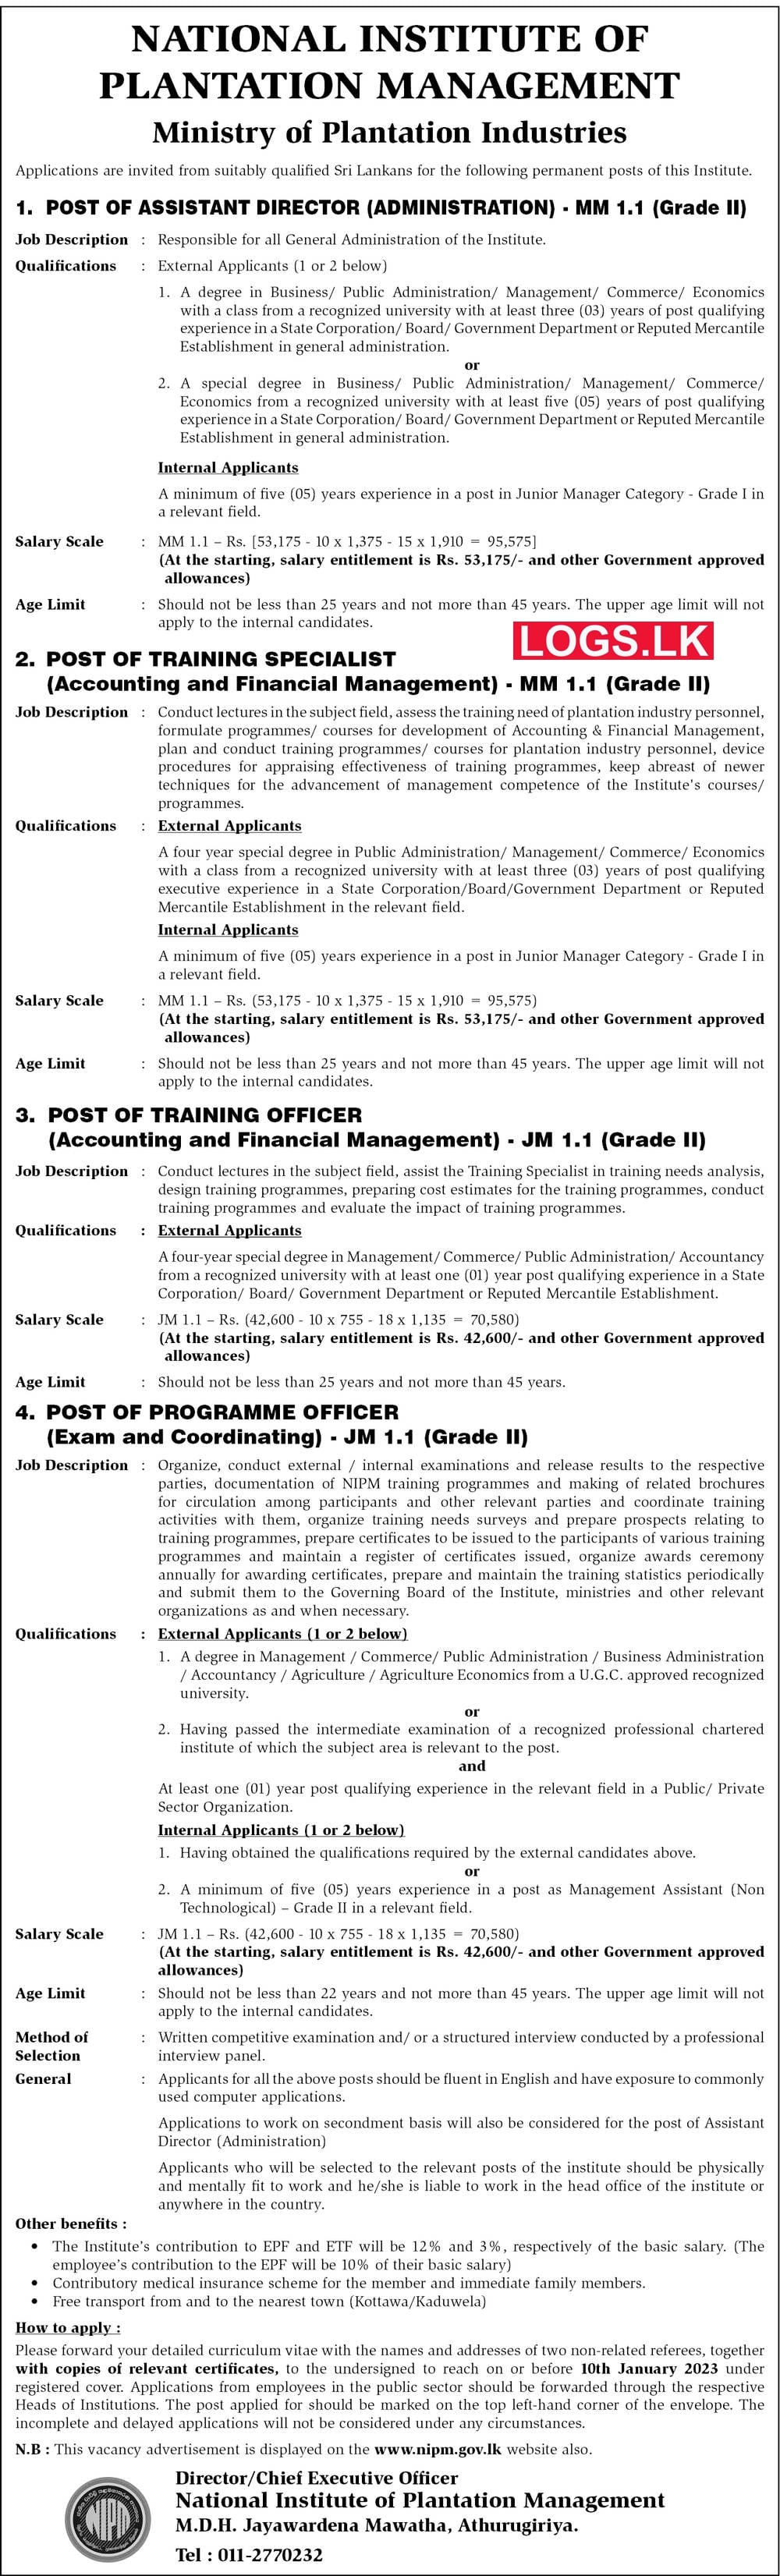 National Institute of Plantation Management Vacancies 2023 Jobs Vacancies